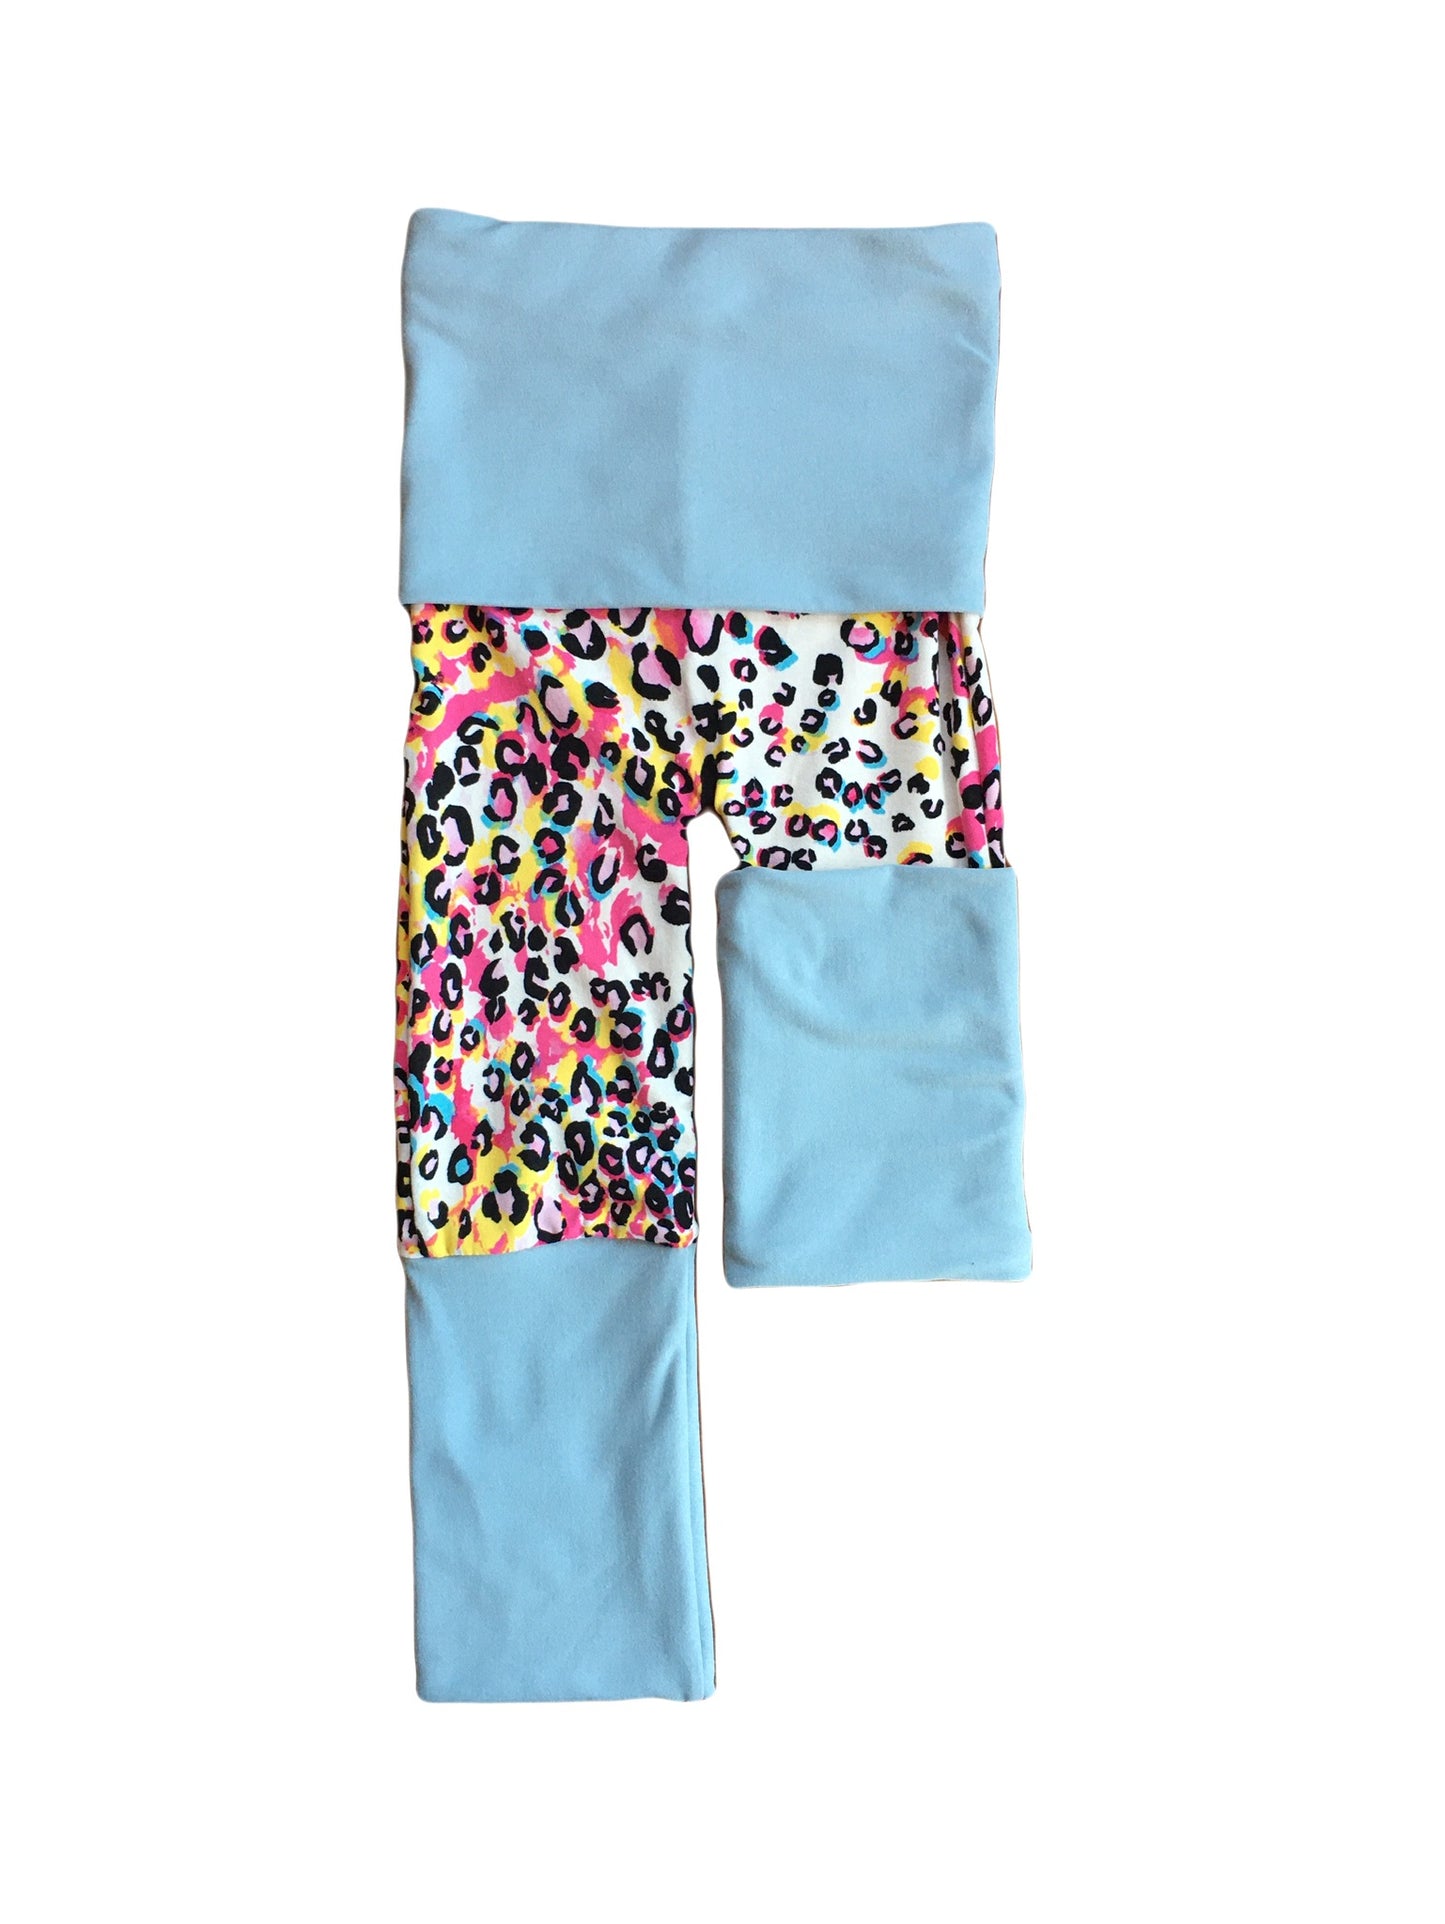 Adjustable Pants - Leopard with Light Blue